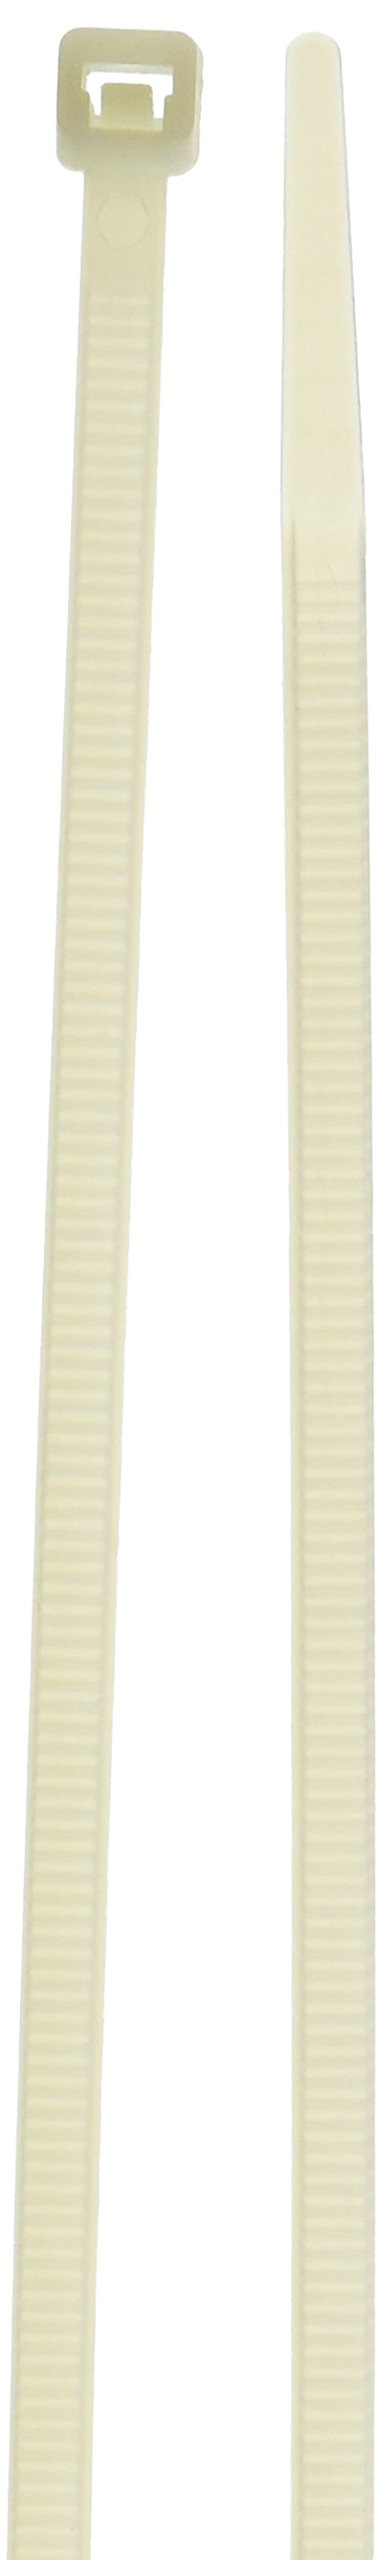  [AUSTRALIA] - Morris 20056 50LB Tensile Strength Nylon Cable Tie, 11-Inch Length, 100-Pack